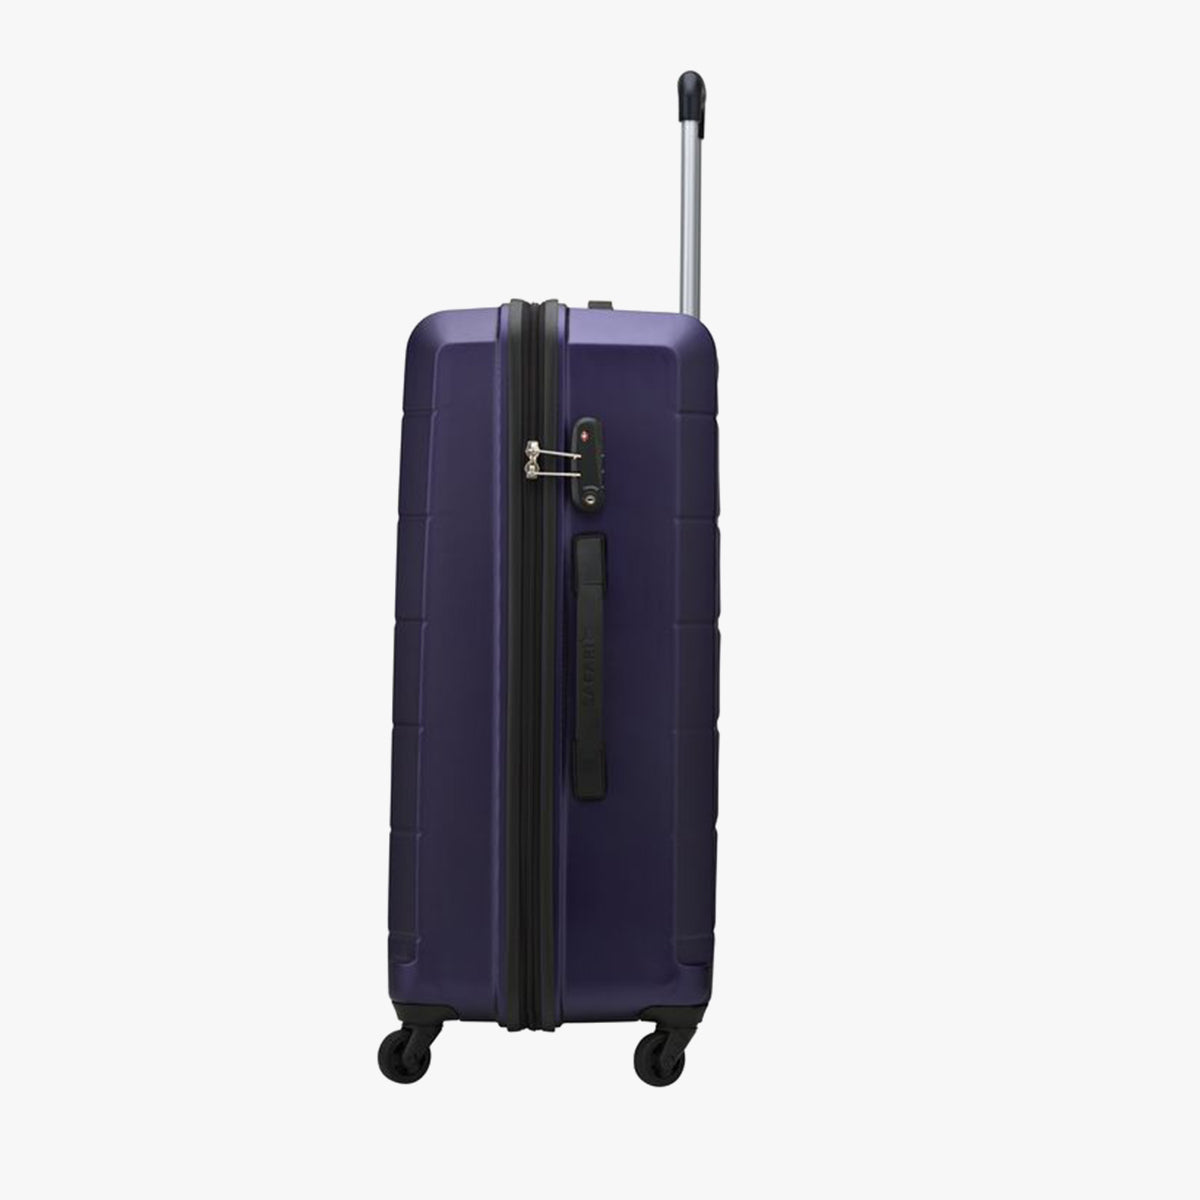 Regloss Antiscratch Hard Luggage Combo Set (Cabin, Medium, Large) - Purple